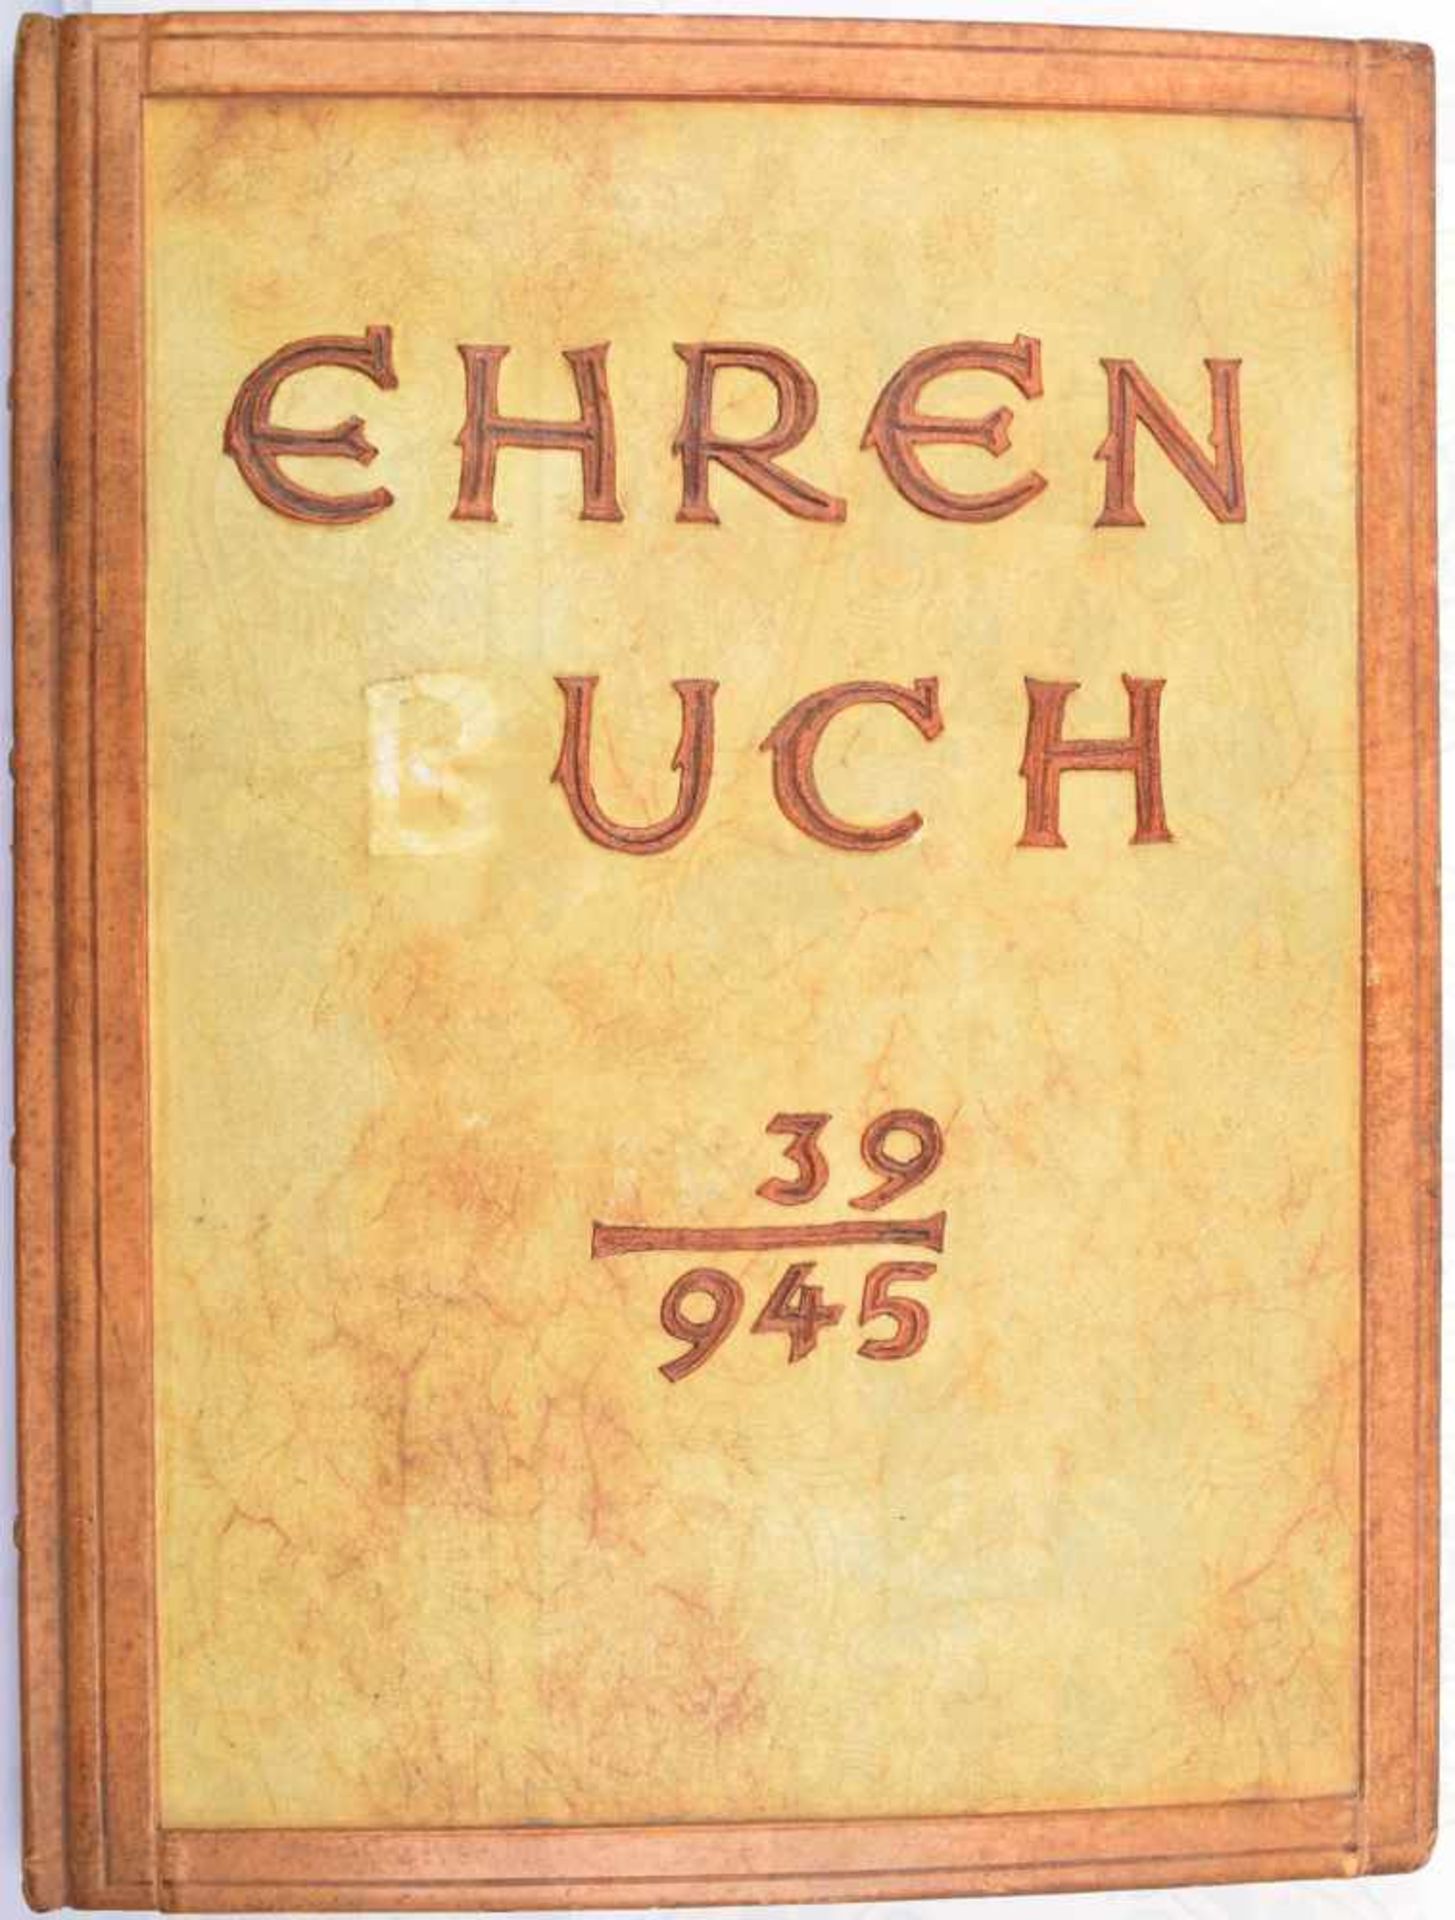 EHRENBUCH DER STADT BURBACH 1939-1945, hrsg. um 1950, 29 Blatt Büttenpapier, 21 bedruckte Seiten